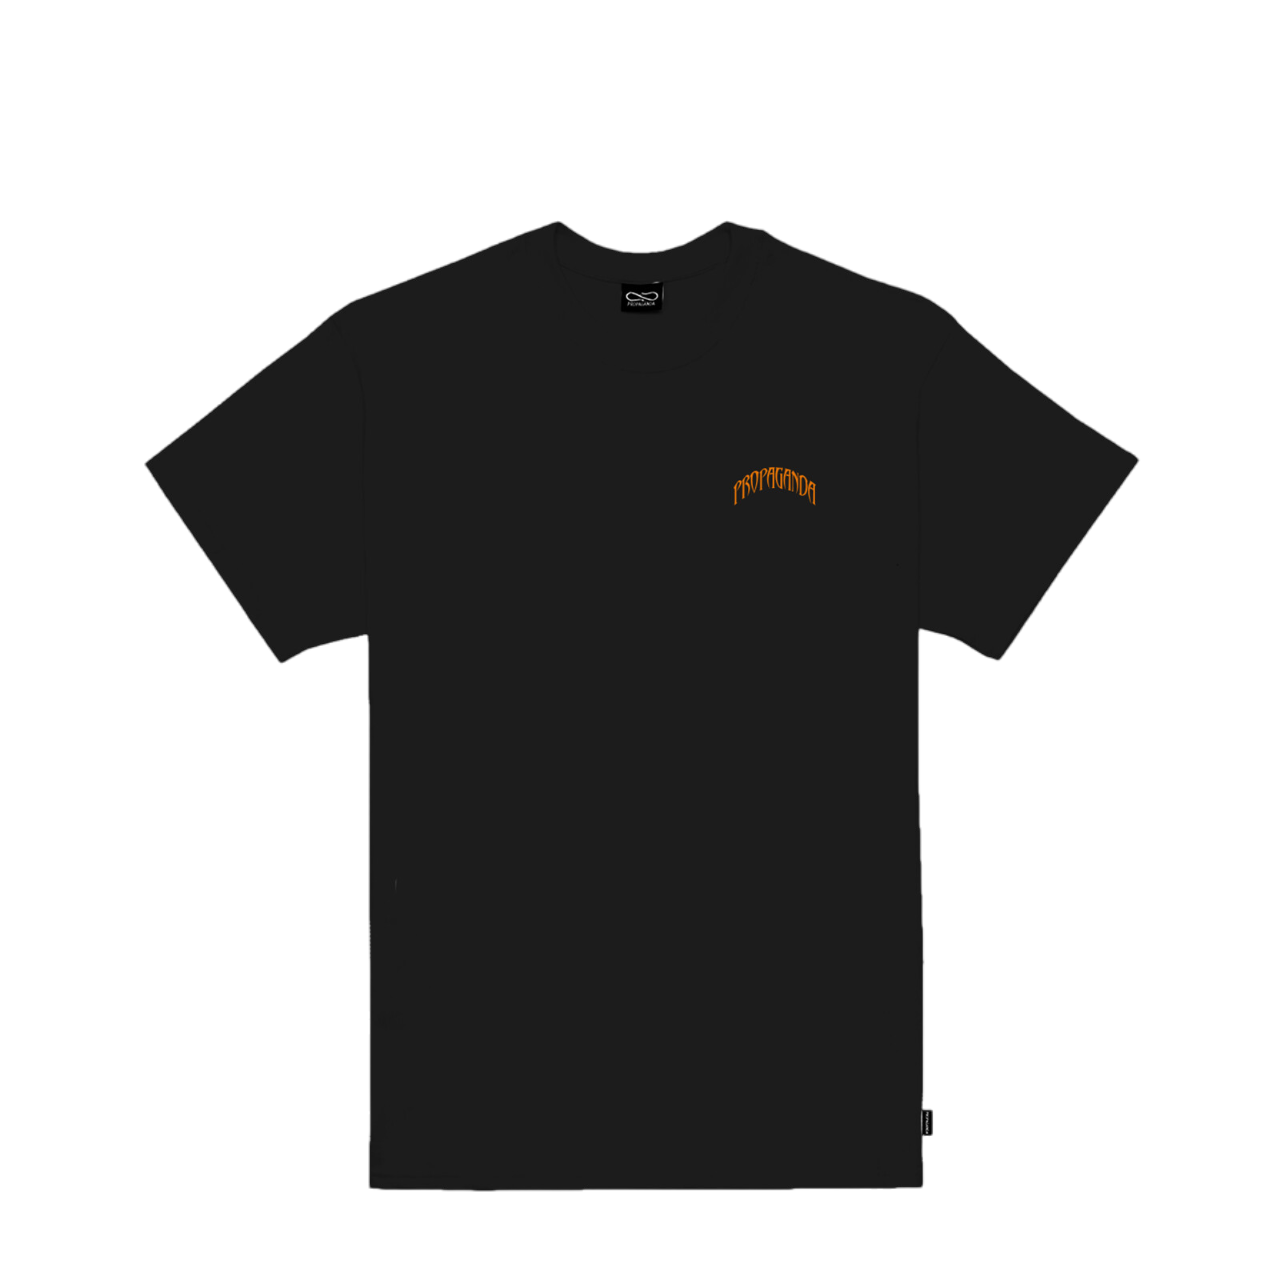 Propaganda short sleeve t-shirt with Triangle Cobrahm print 889-01 black